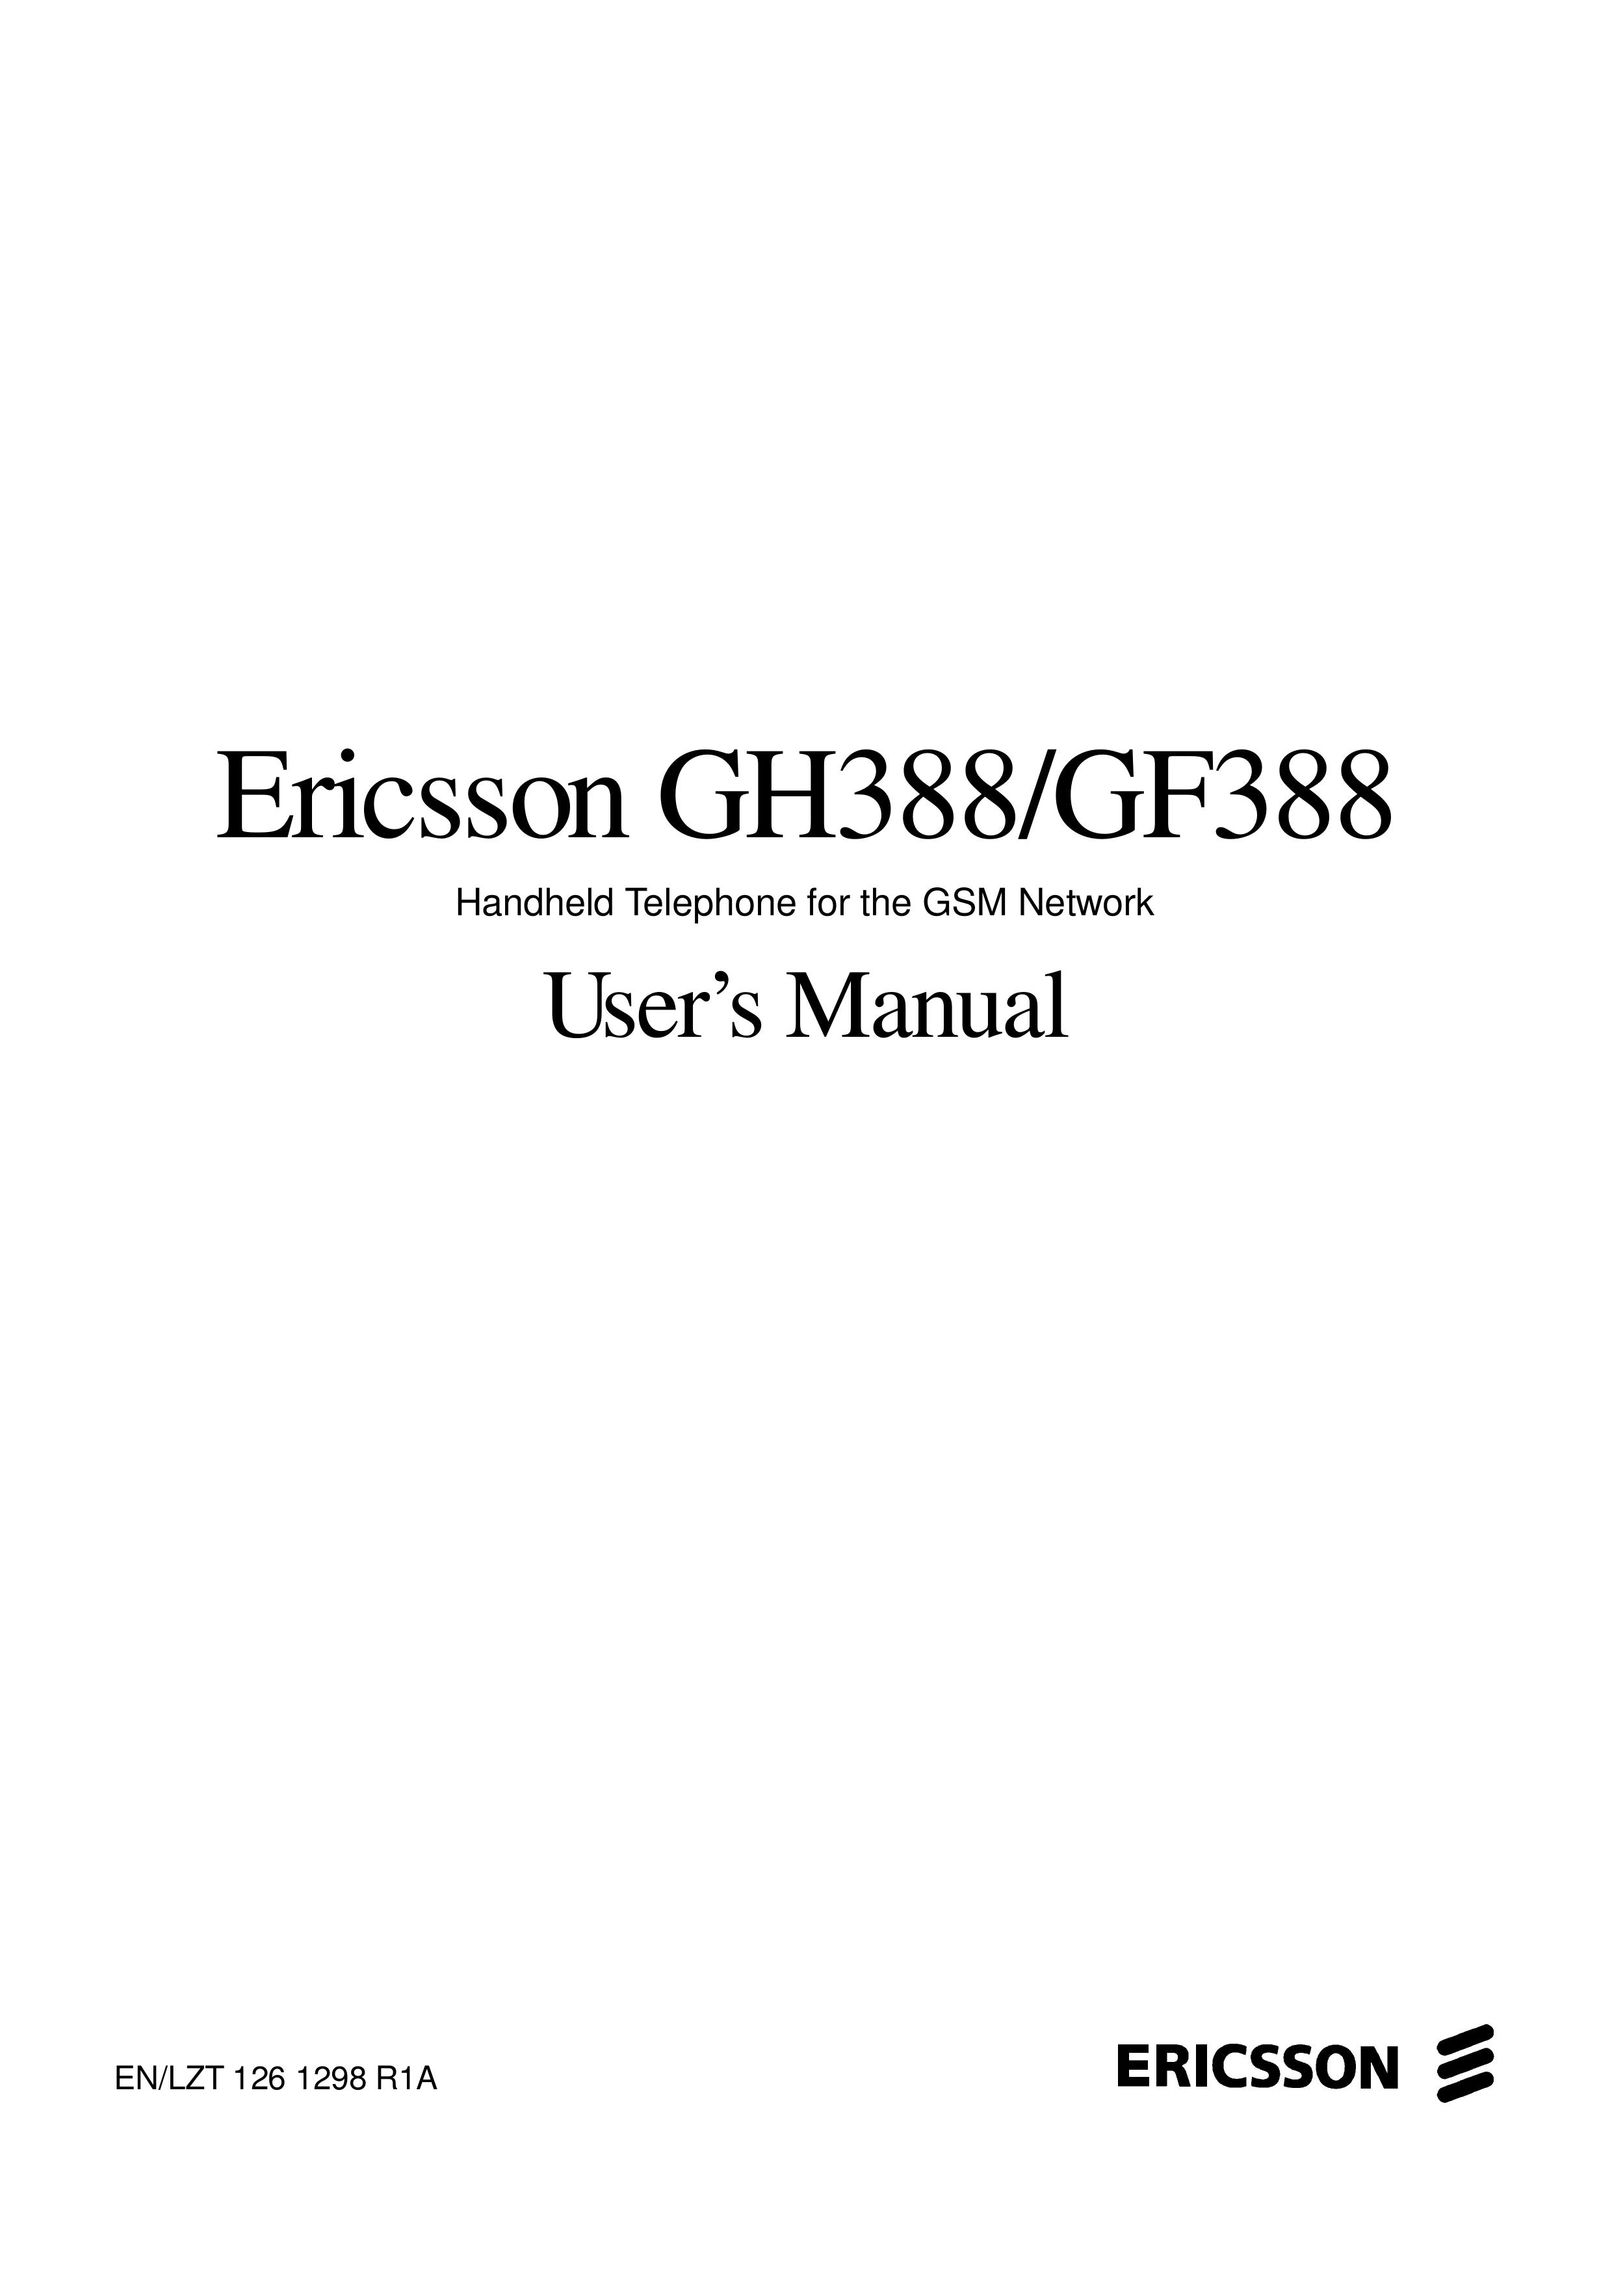 Ericsson GH388/GF388 Telephone User Manual